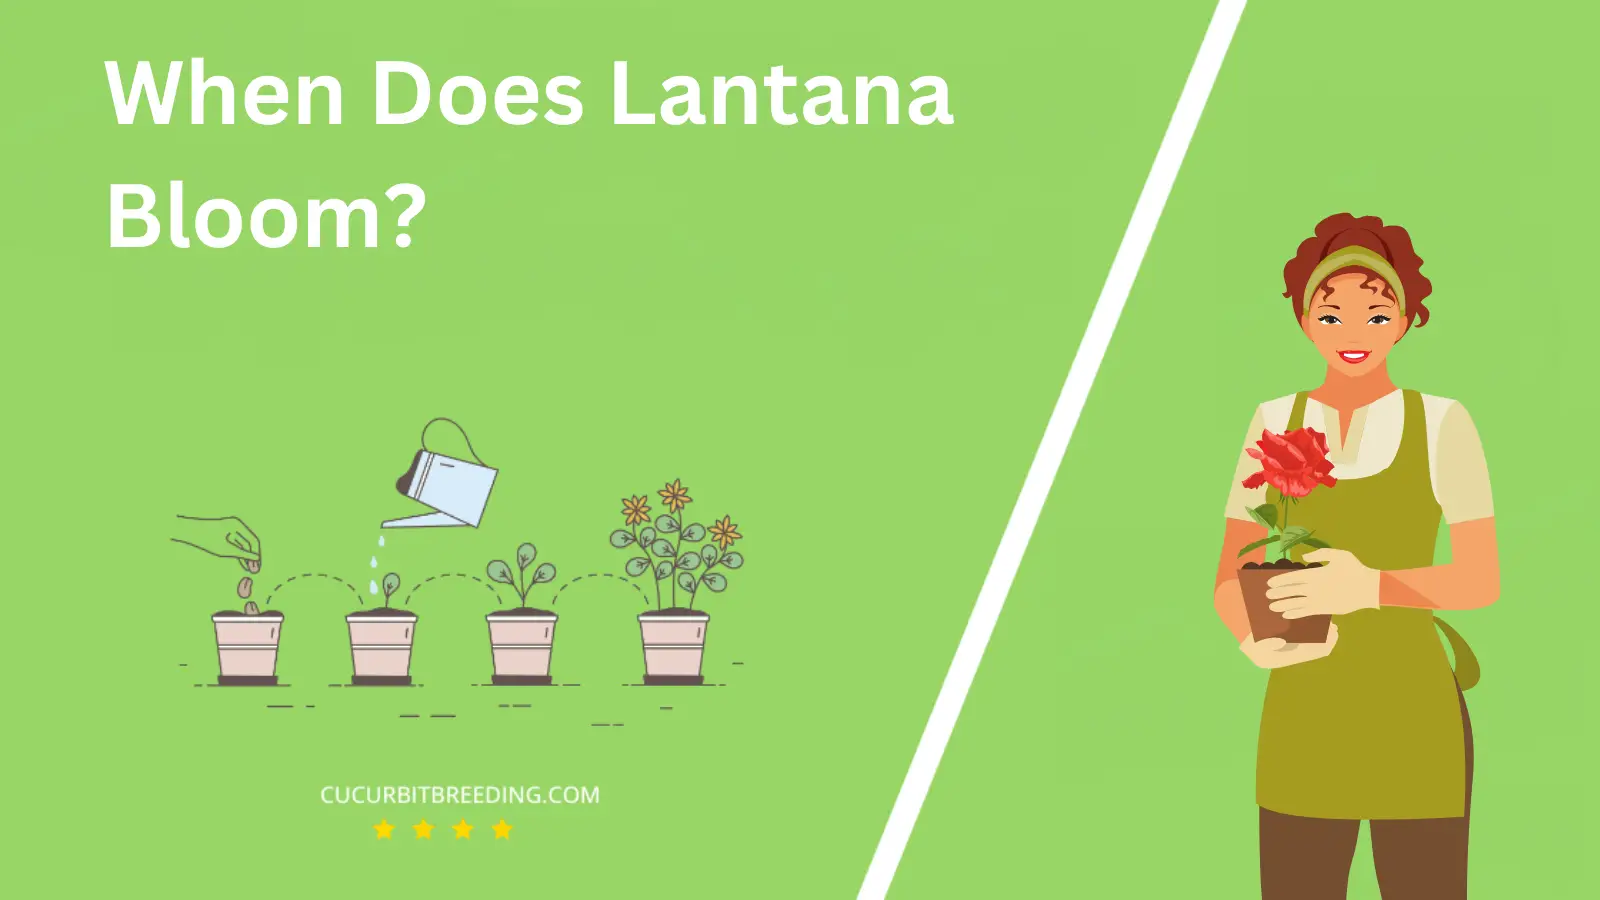 When Does Lantana Bloom?